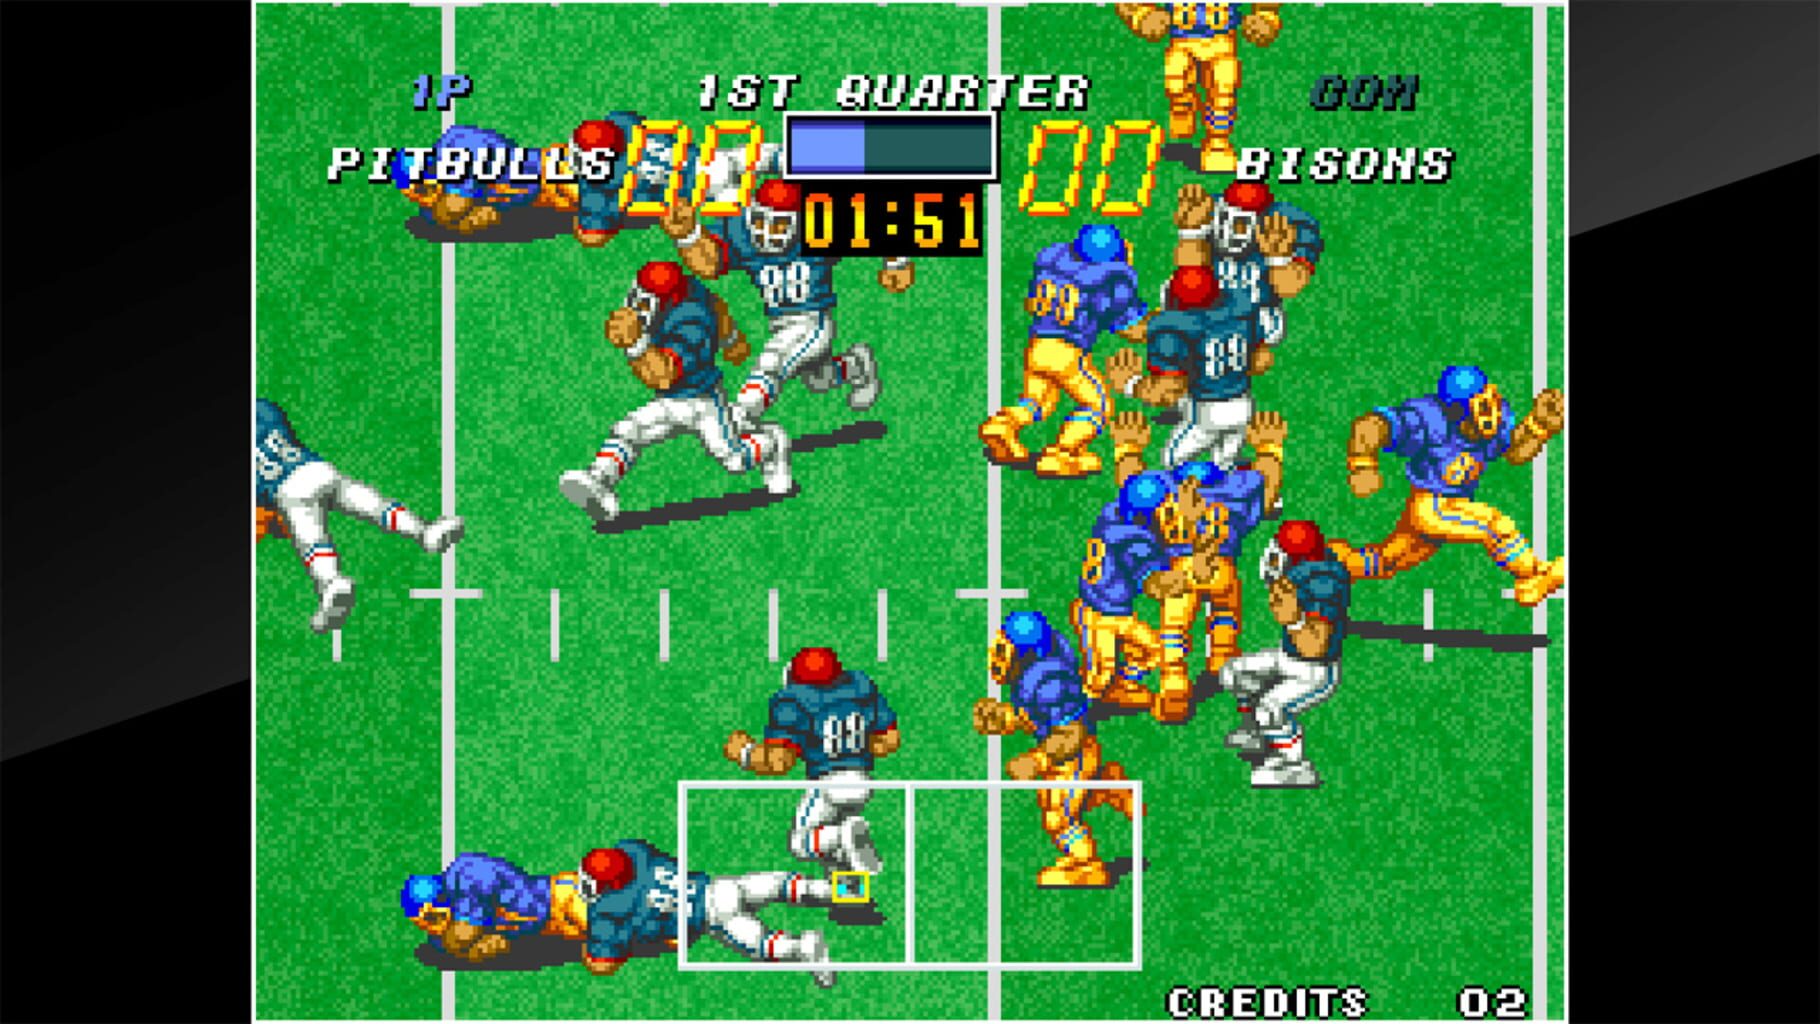 ACA Neo Geo: Football frenzy screenshot